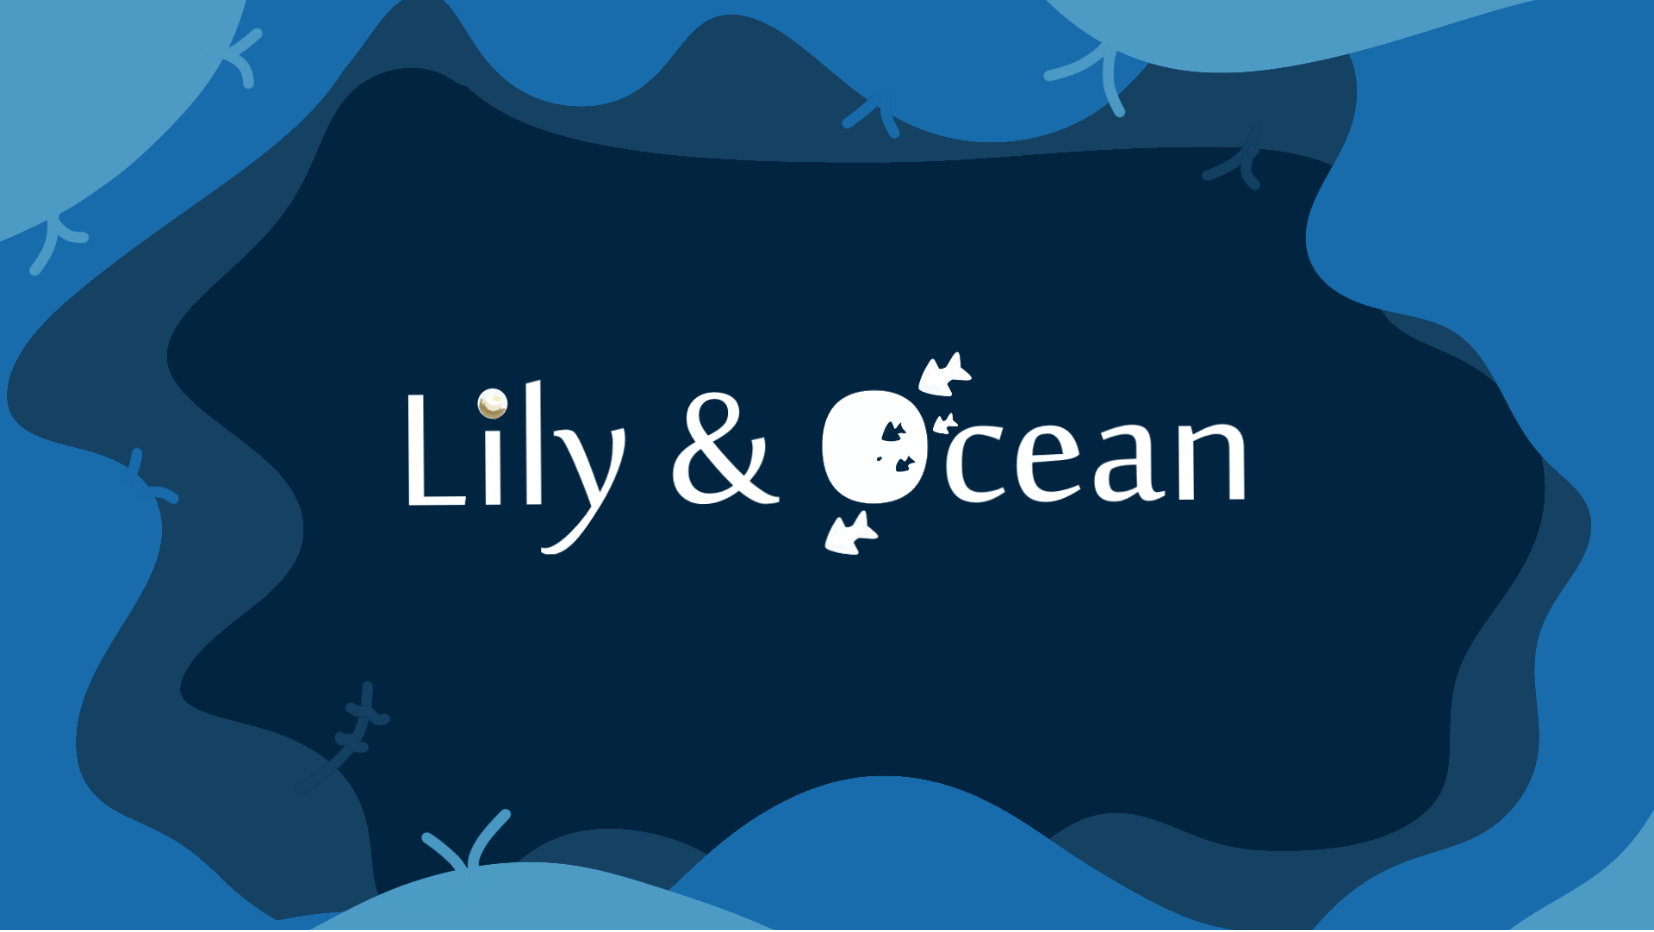 Lily & Ocean